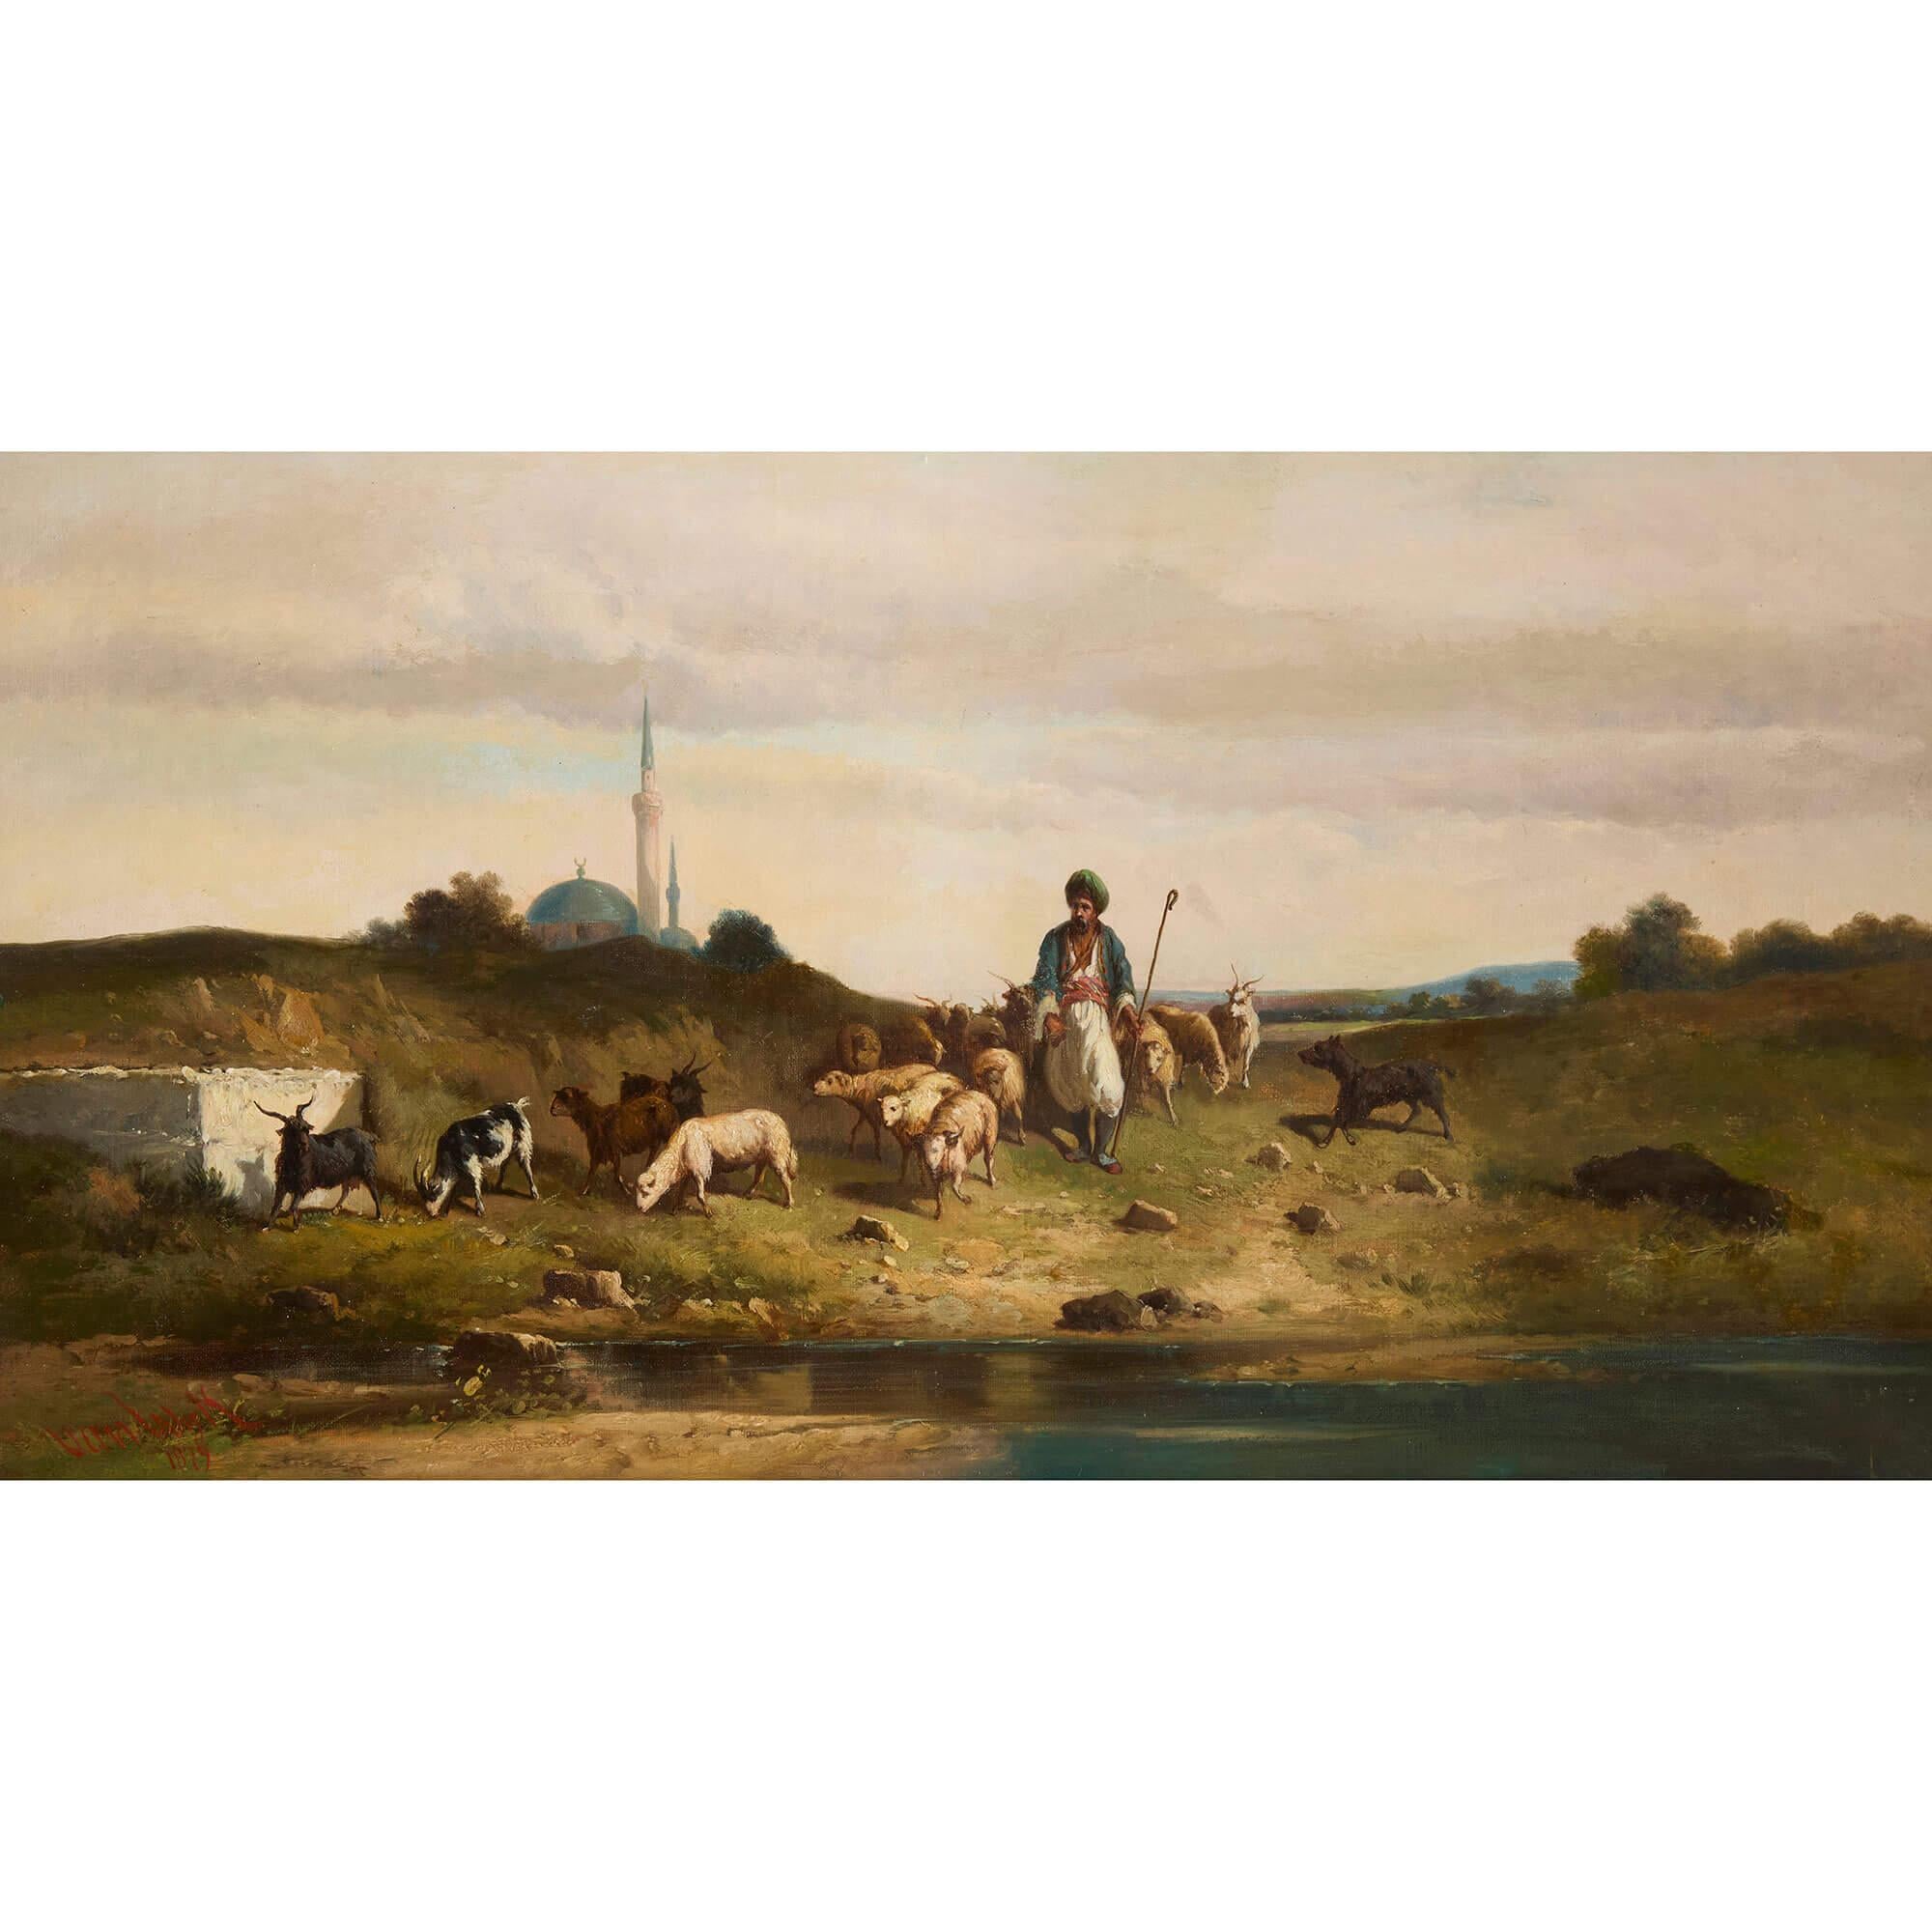 Set of Four Orientalist Landscape Paintings by van Wijk  For Sale 3